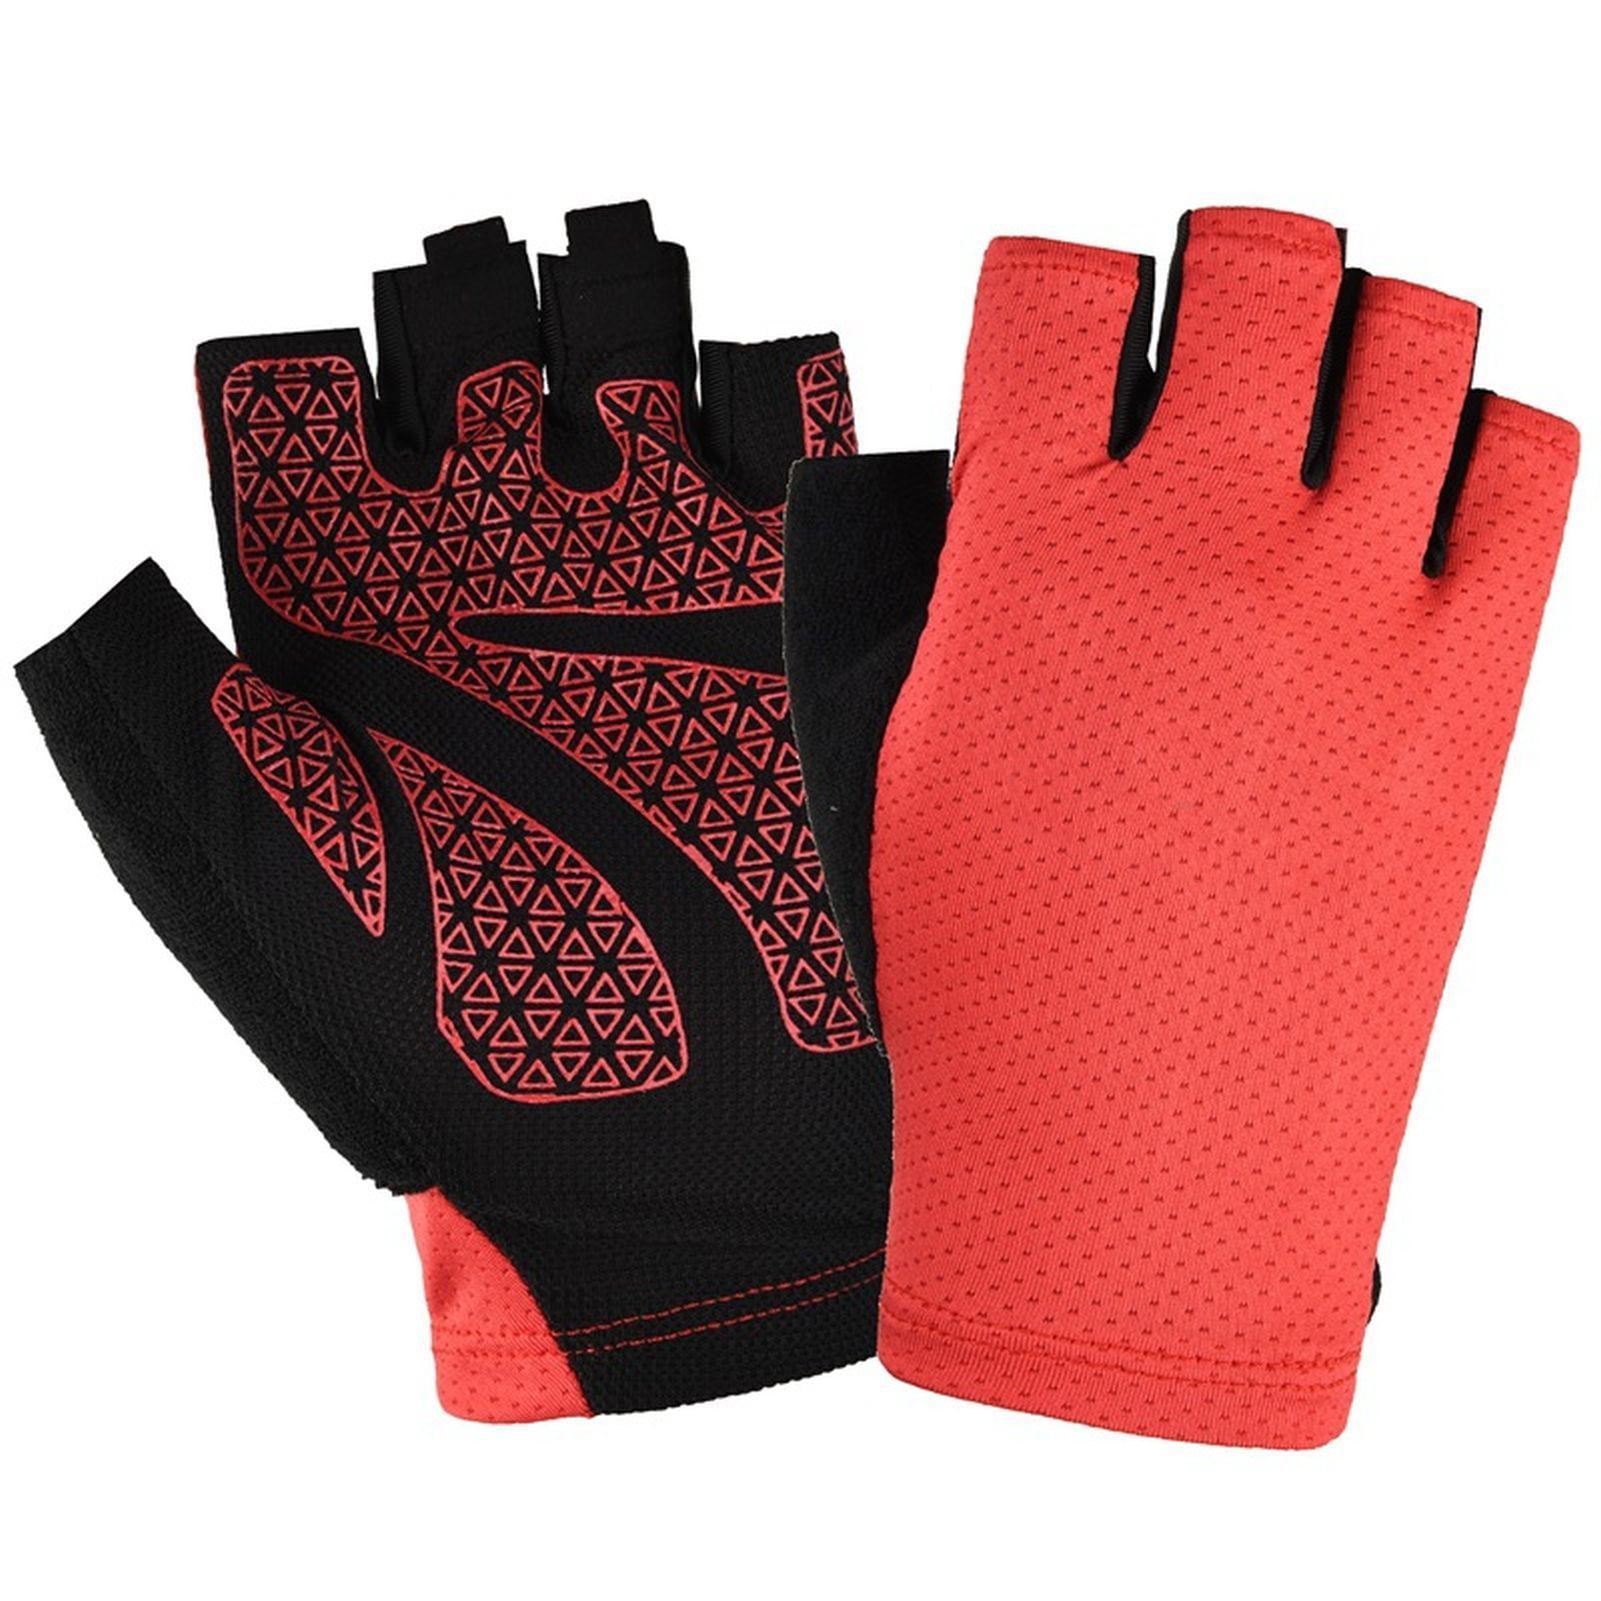 Vgo 2Pairs Kids Half-Finger Breathable Skateboarding Gloves Outdoor Gloves with Anti-Slip Padding Palm Blue, SL6084 